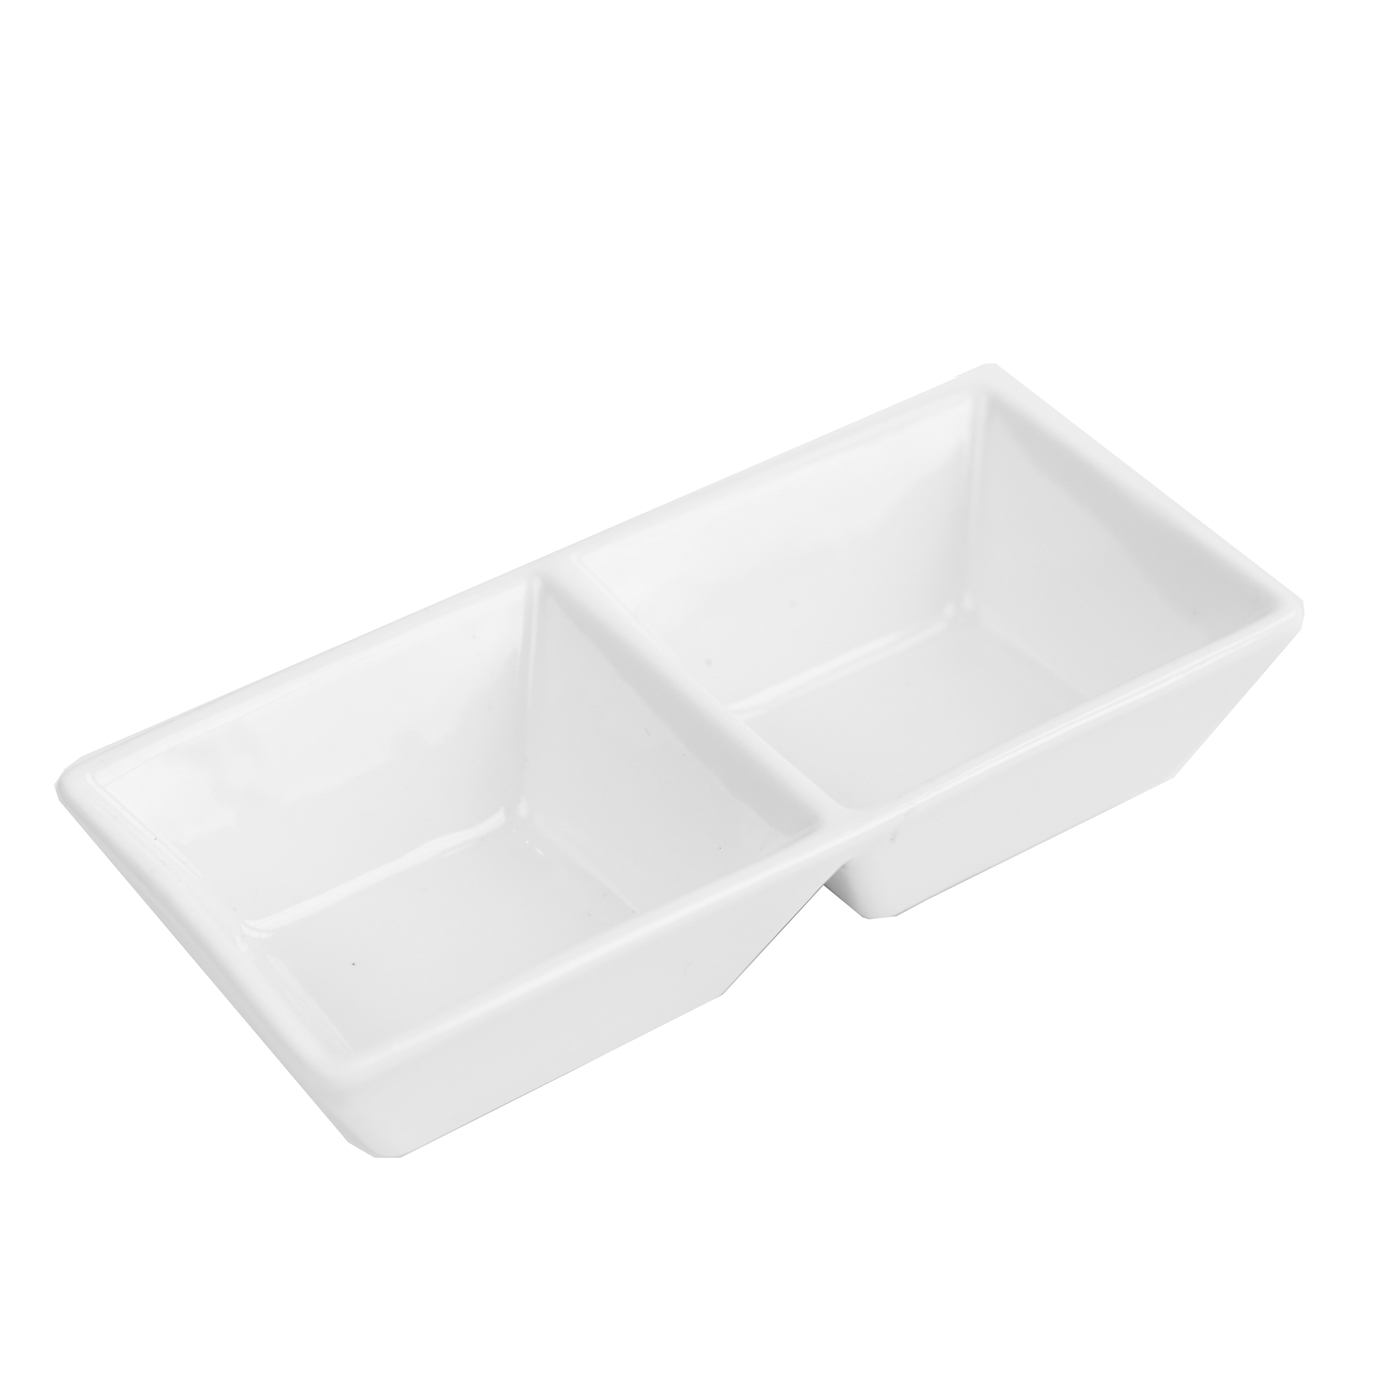 White 2 Section Ceramic Dish #5252